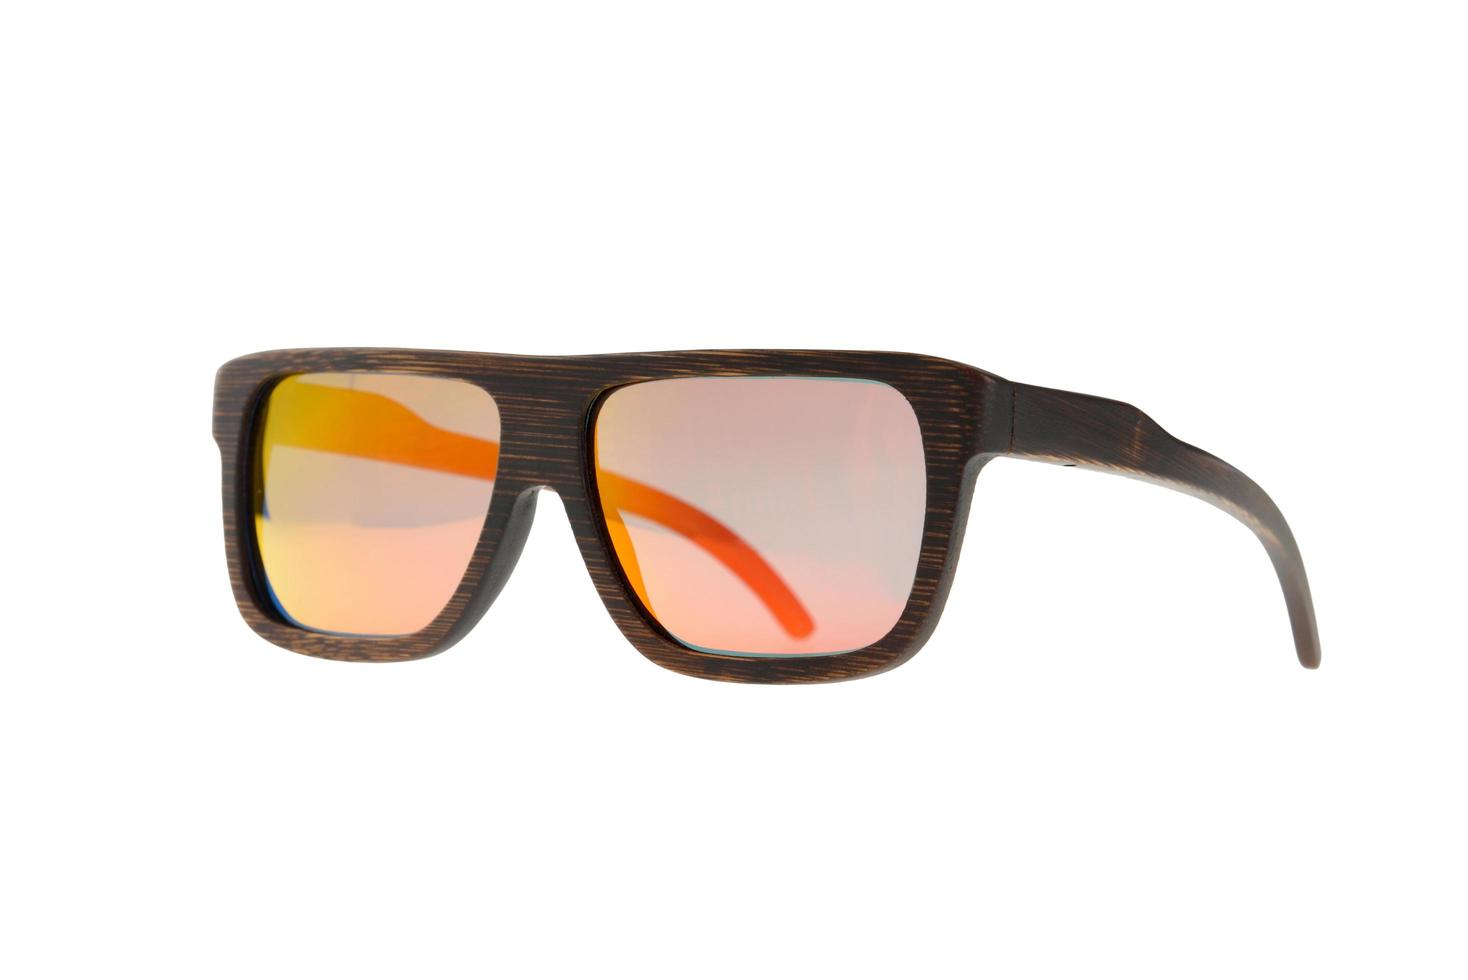 houten donkerbruine zonnebril met oranje glazen foto